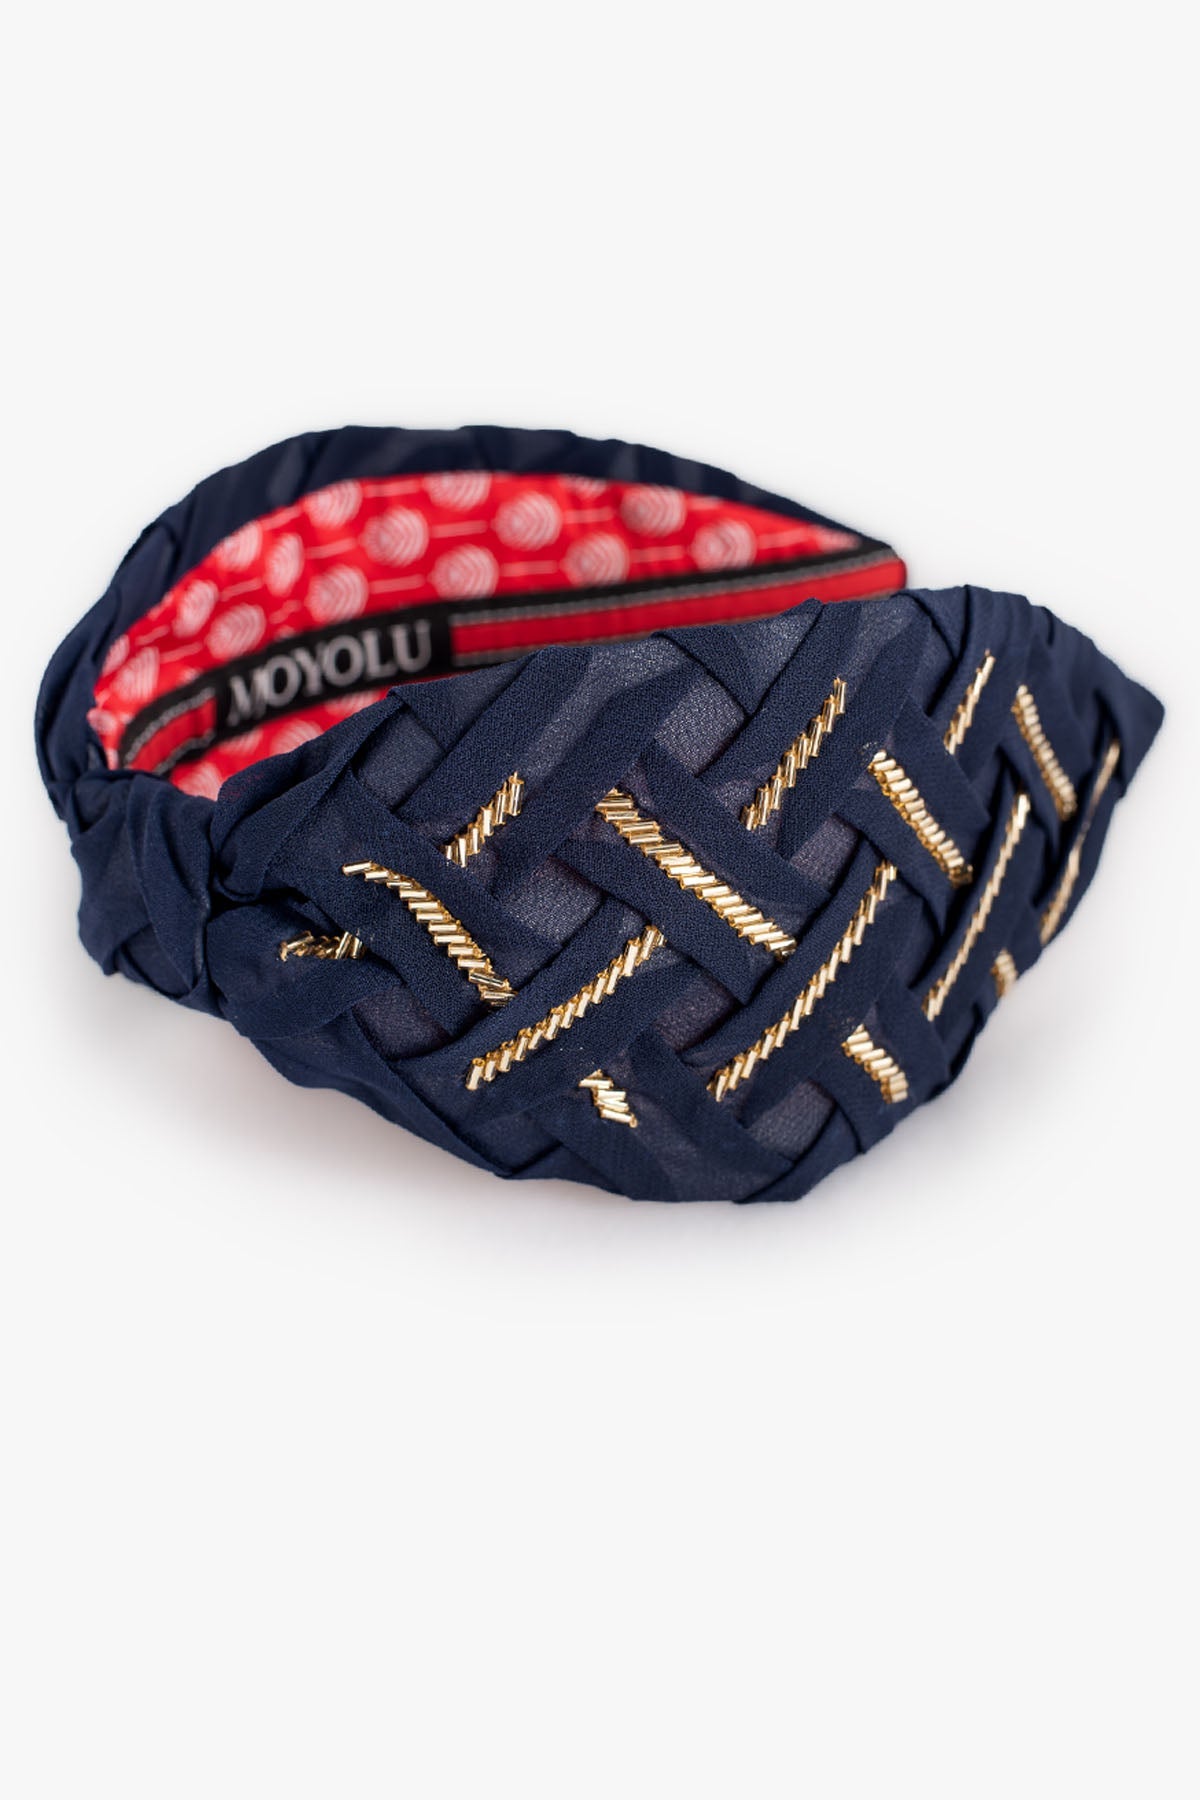 Moyolu Navy Viscose Bead Work Headband Accessories online at ScrollnShops